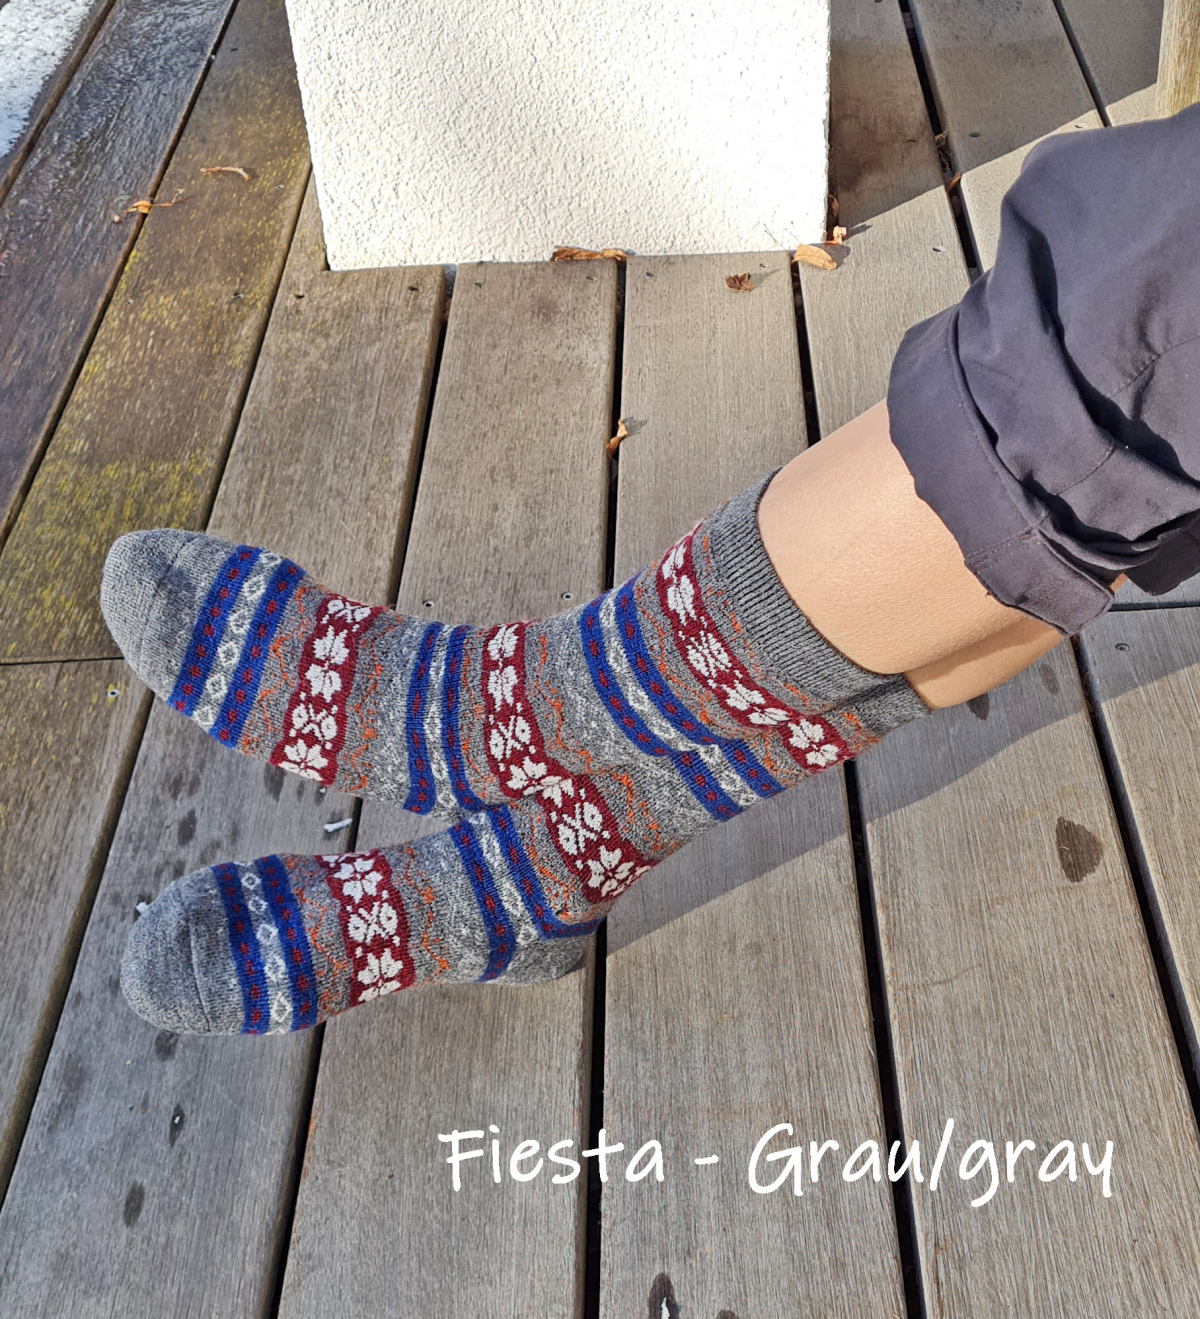 Alpaca Socks - Fiesta - gray